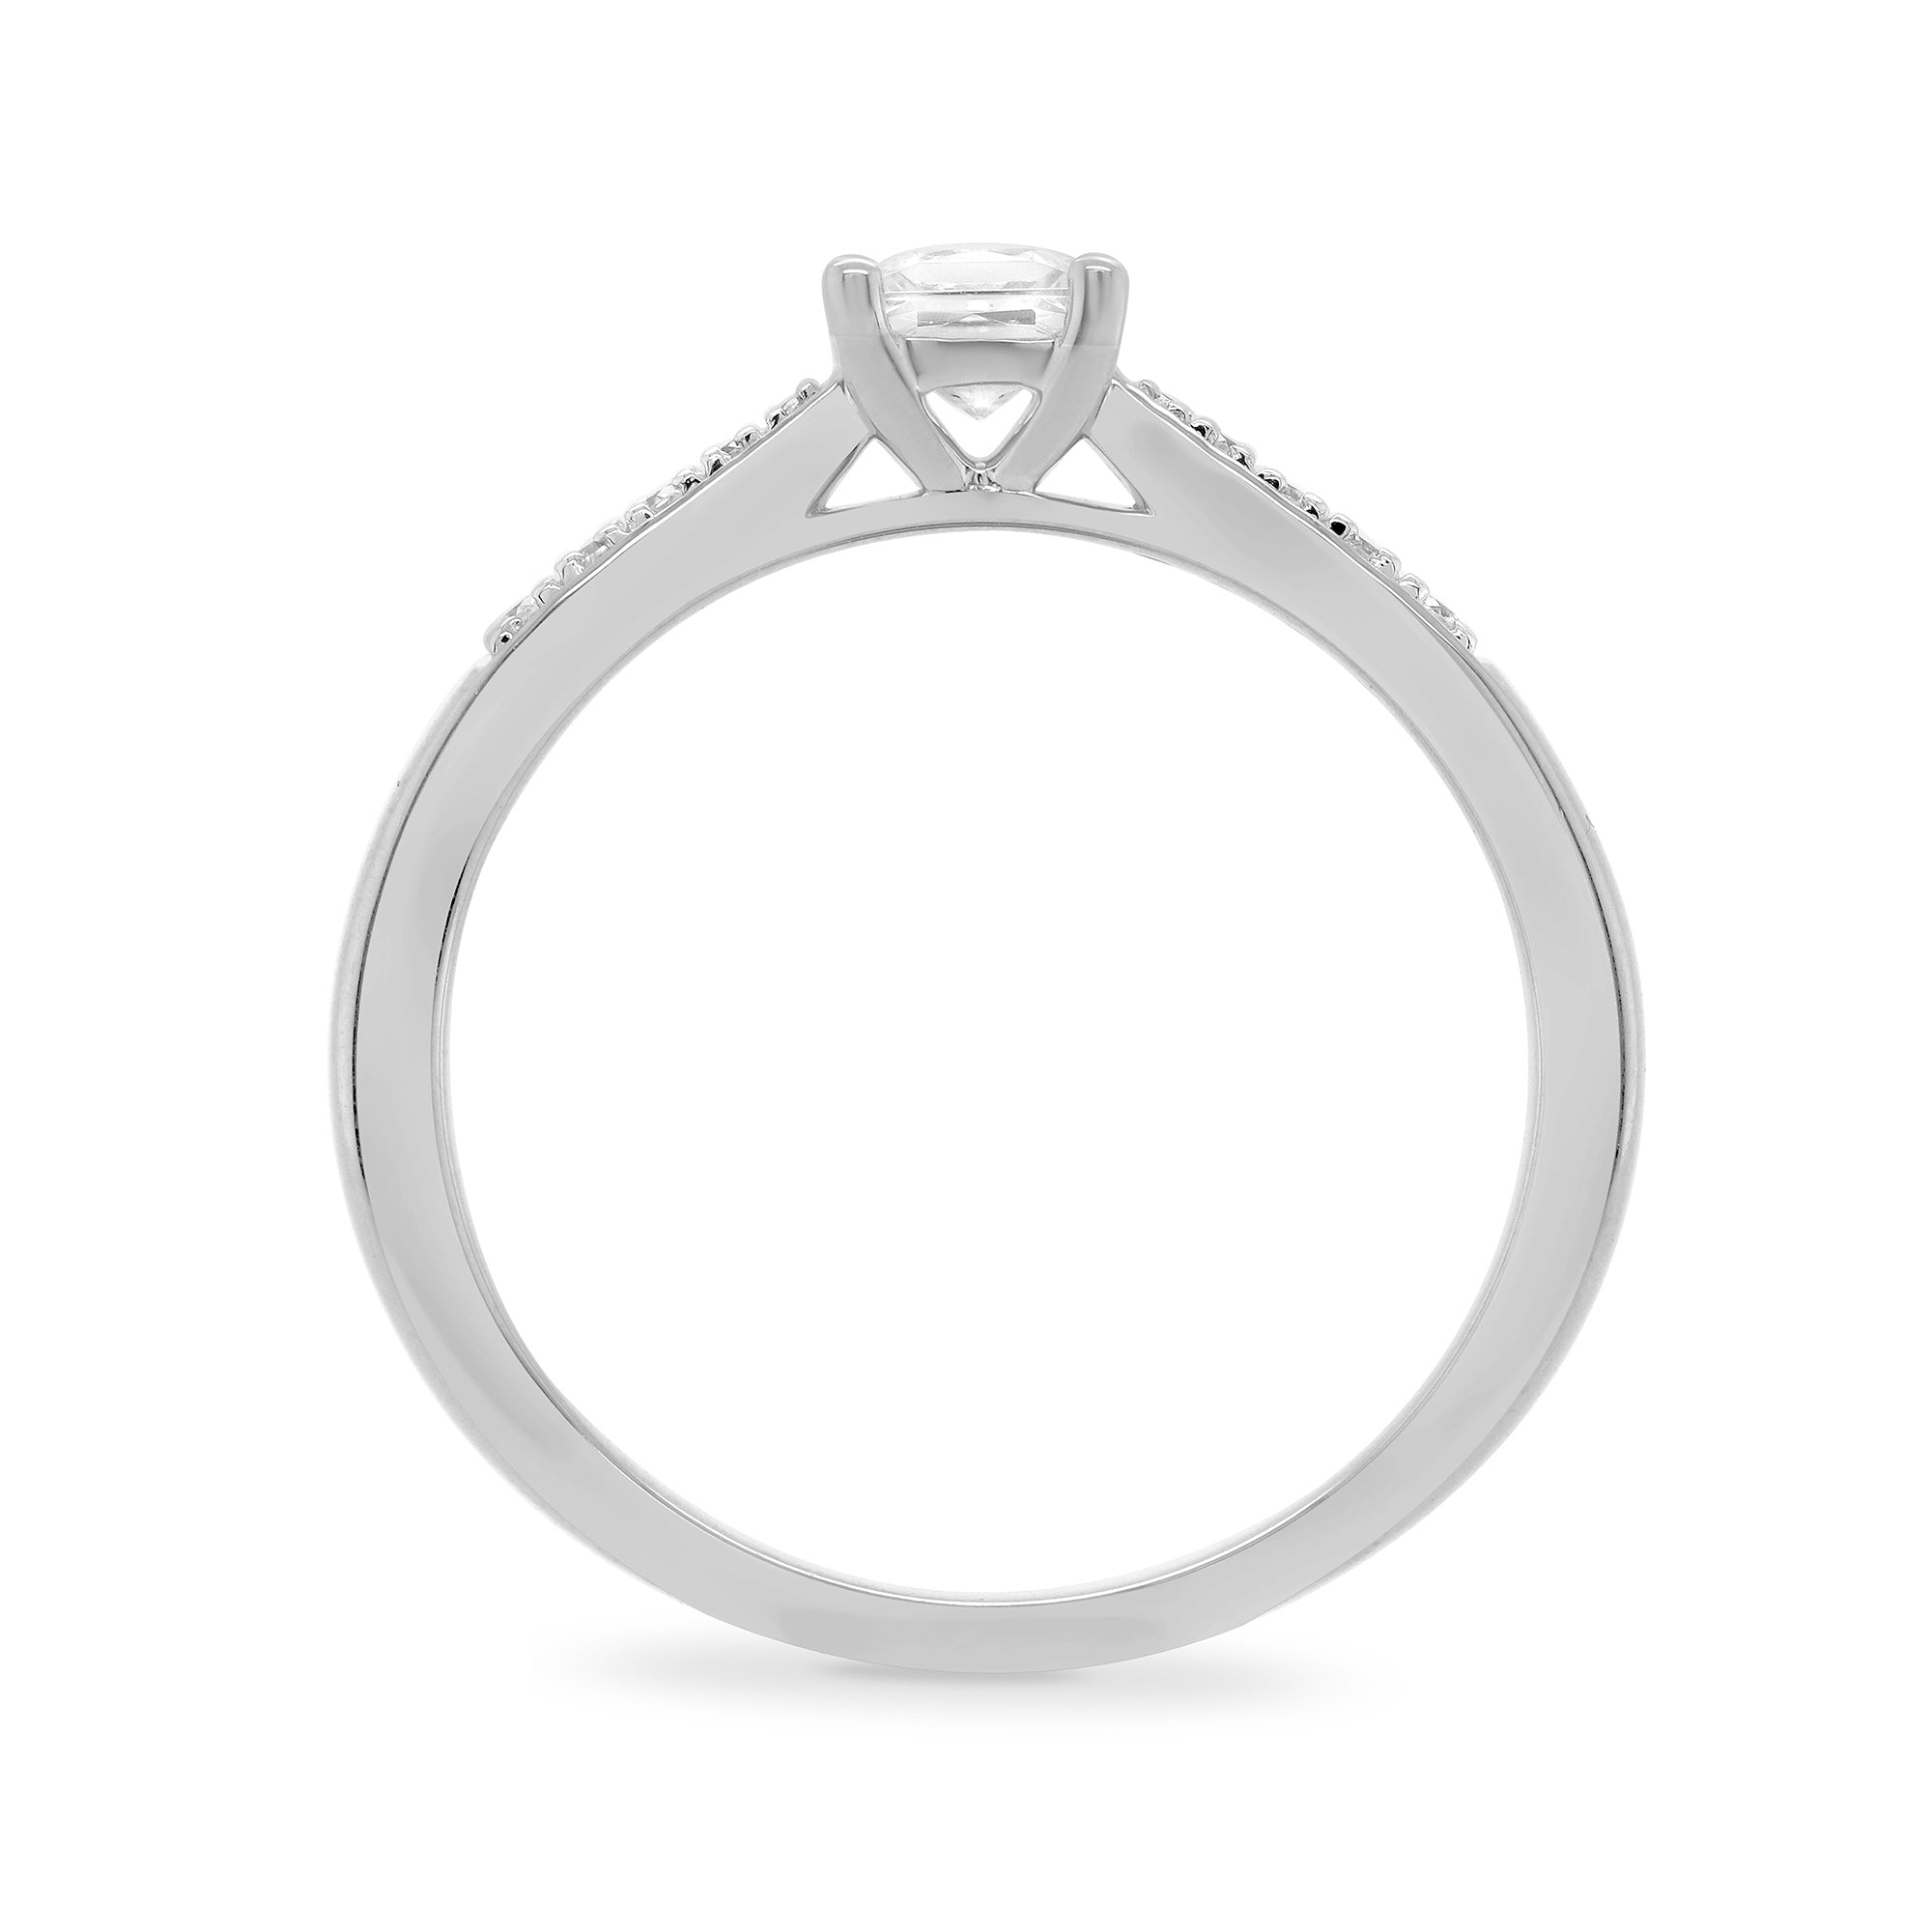 9ct white gold princess cut single stone diamond ring with diamond set shoulders 0.33ct